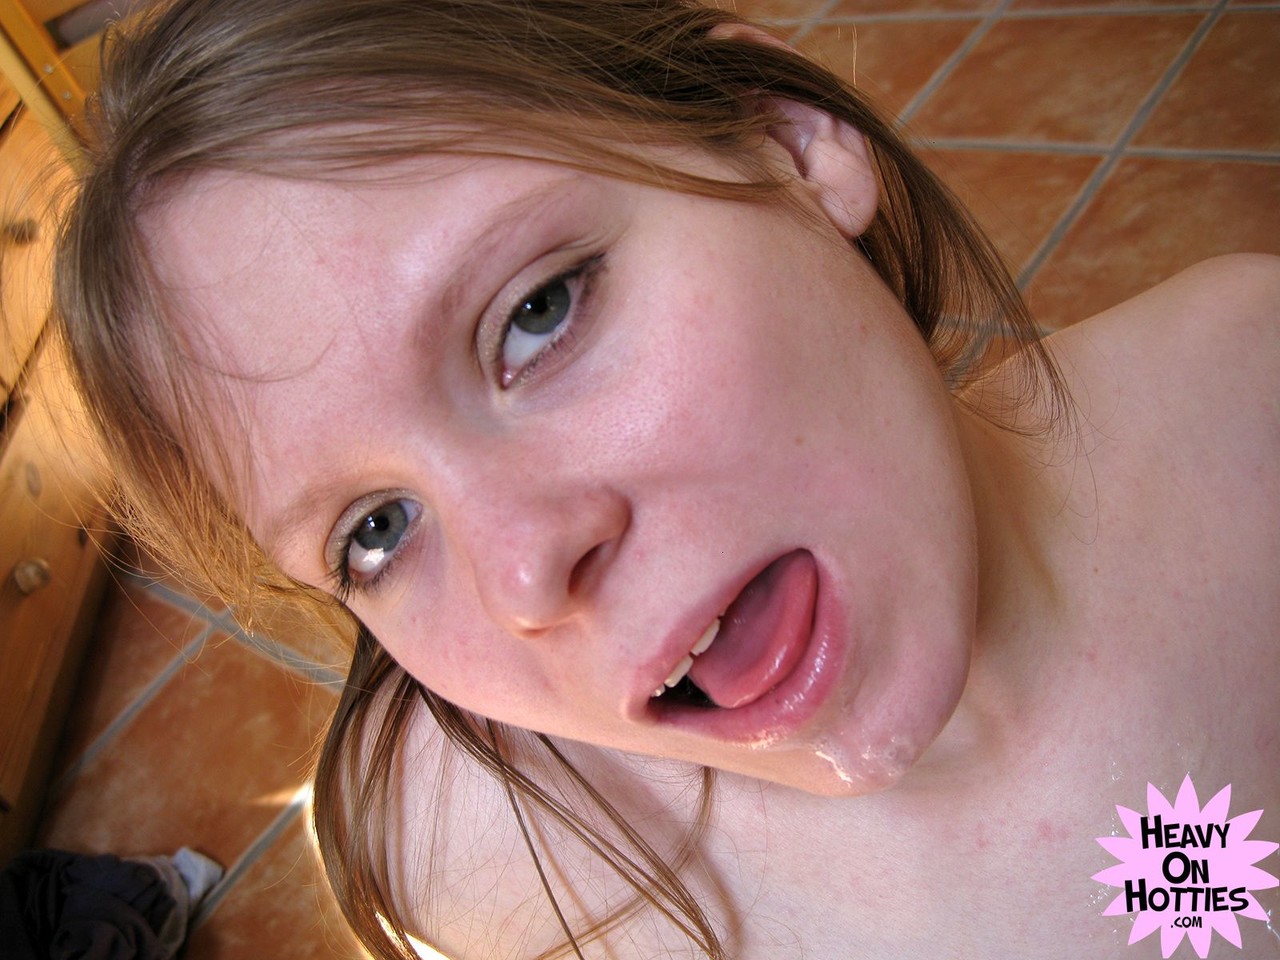 Amateur girl fondles her big natural tits during a POV blowjob 色情照片 #424293092 | Heavy On Hotties Pics, Caroline, Close Up, 手机色情